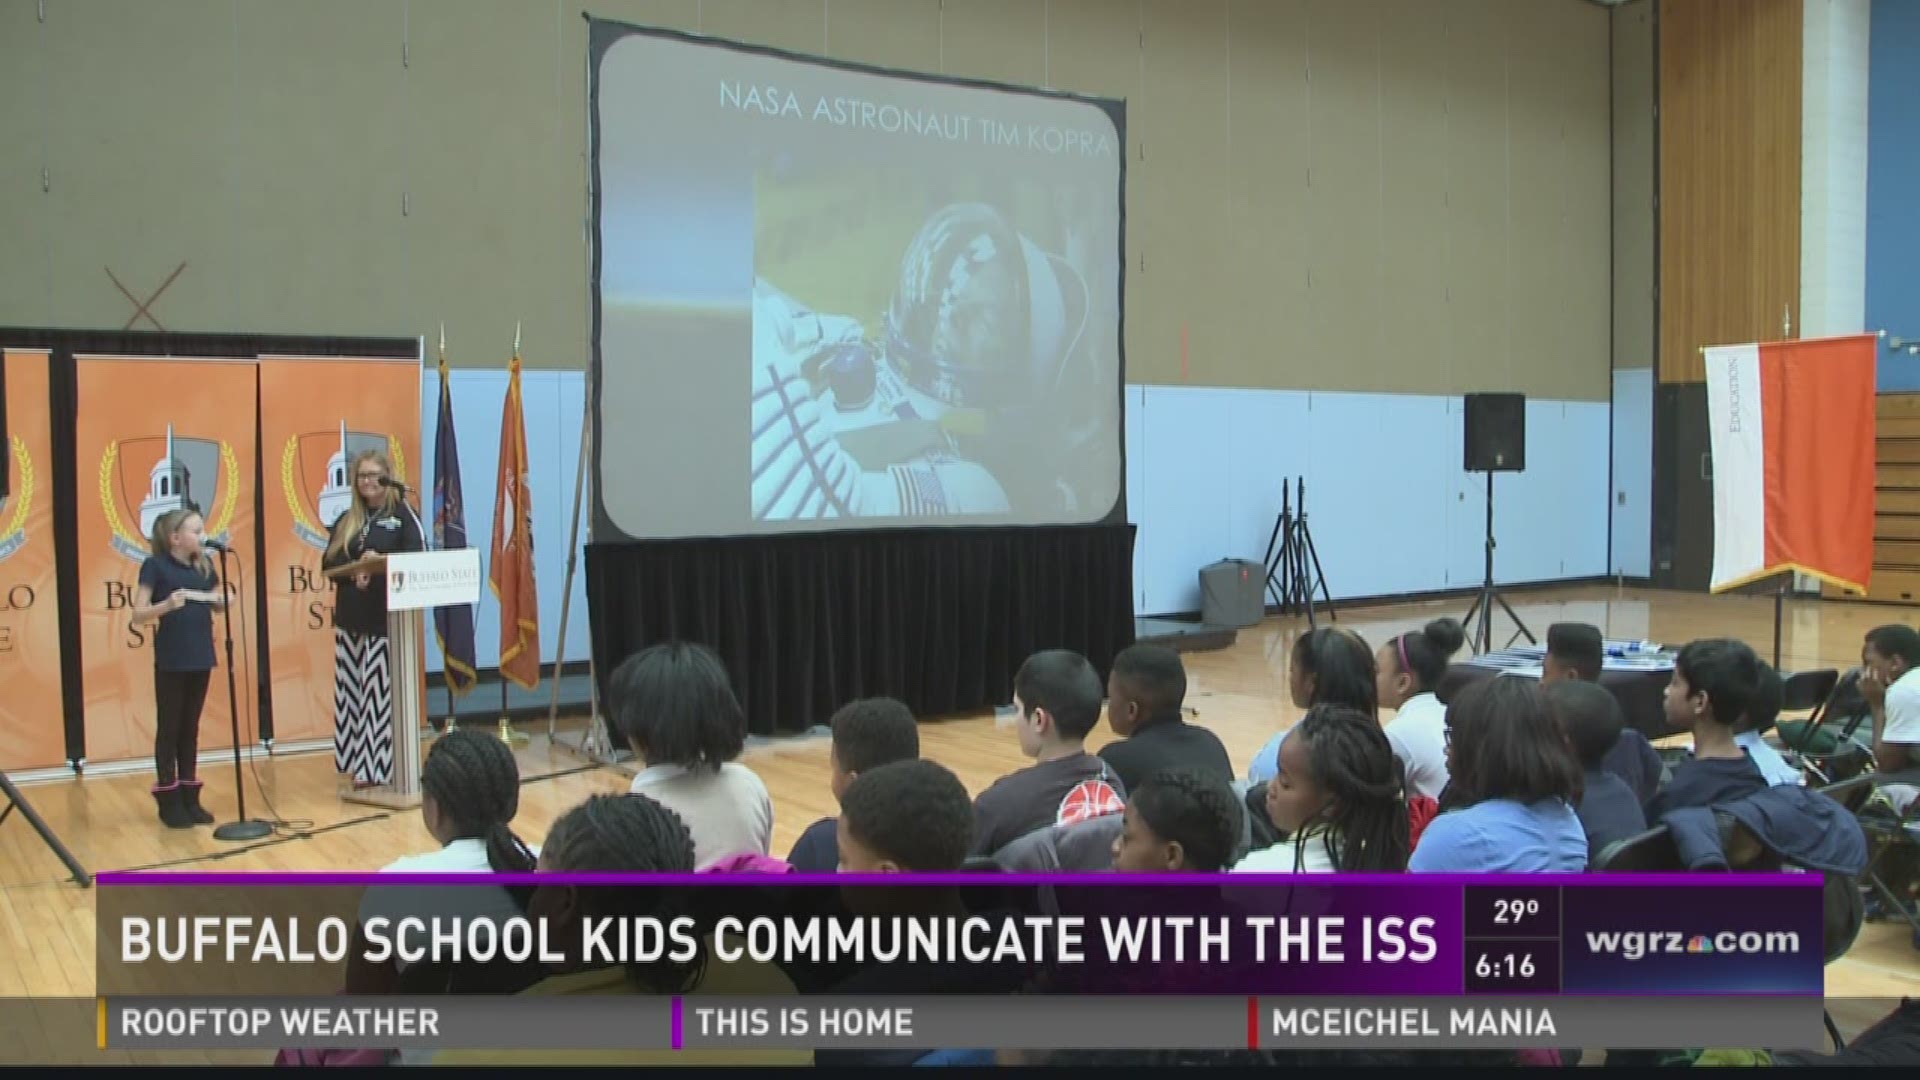 BUFFALO SCHOOL KIDS COMMUNICATE WITH THE ISS